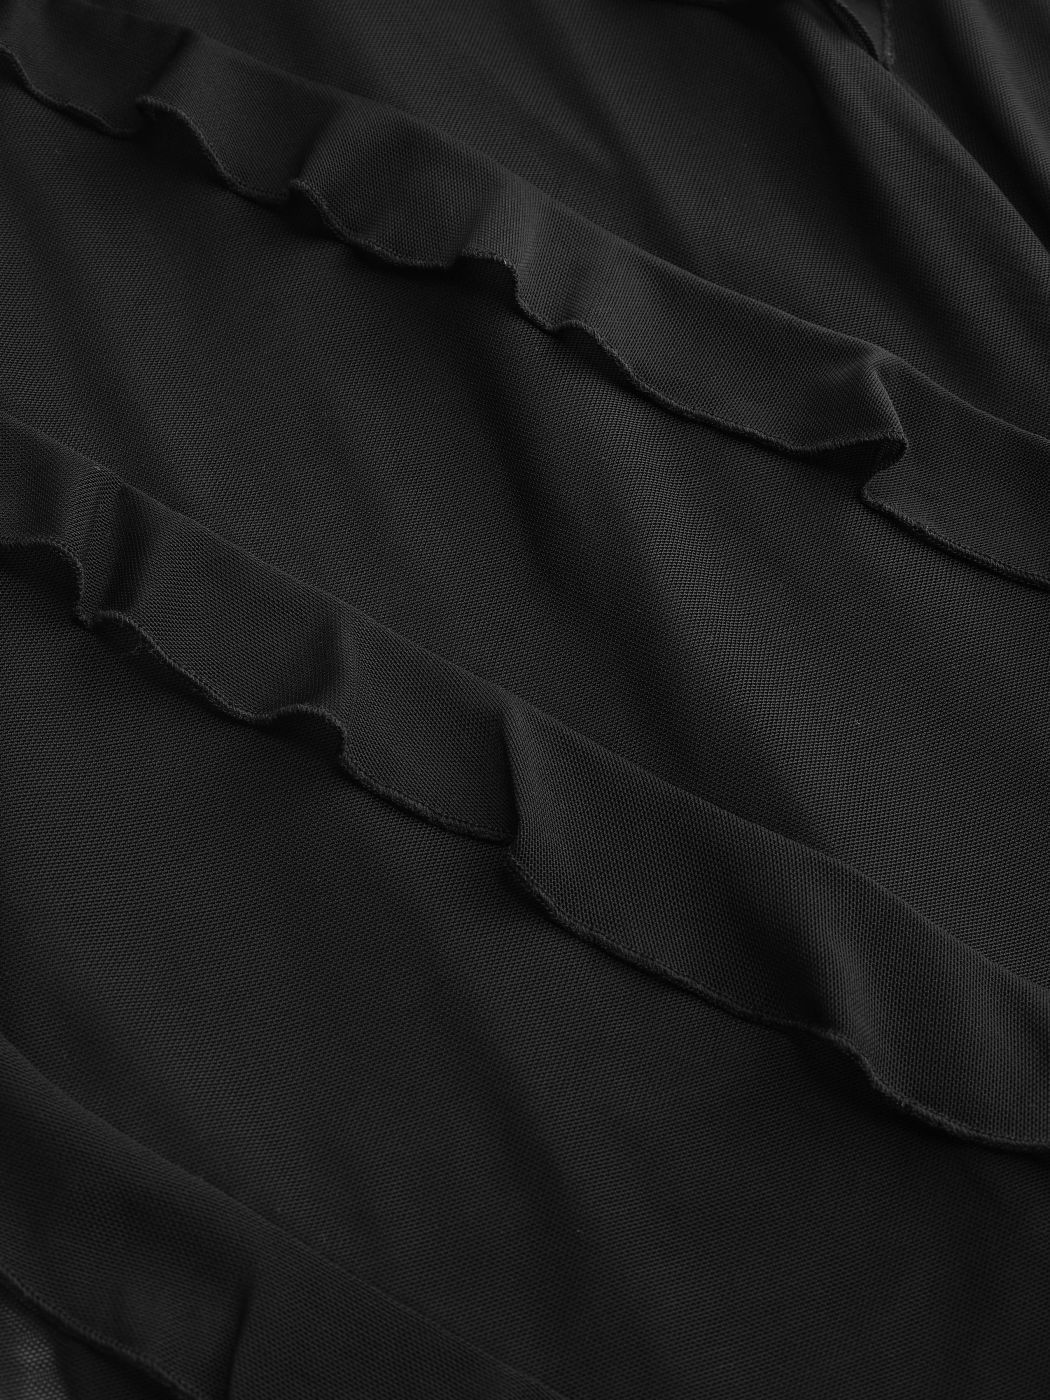 Diablo -Lorion Edge Sexy Split Little Black Skirt